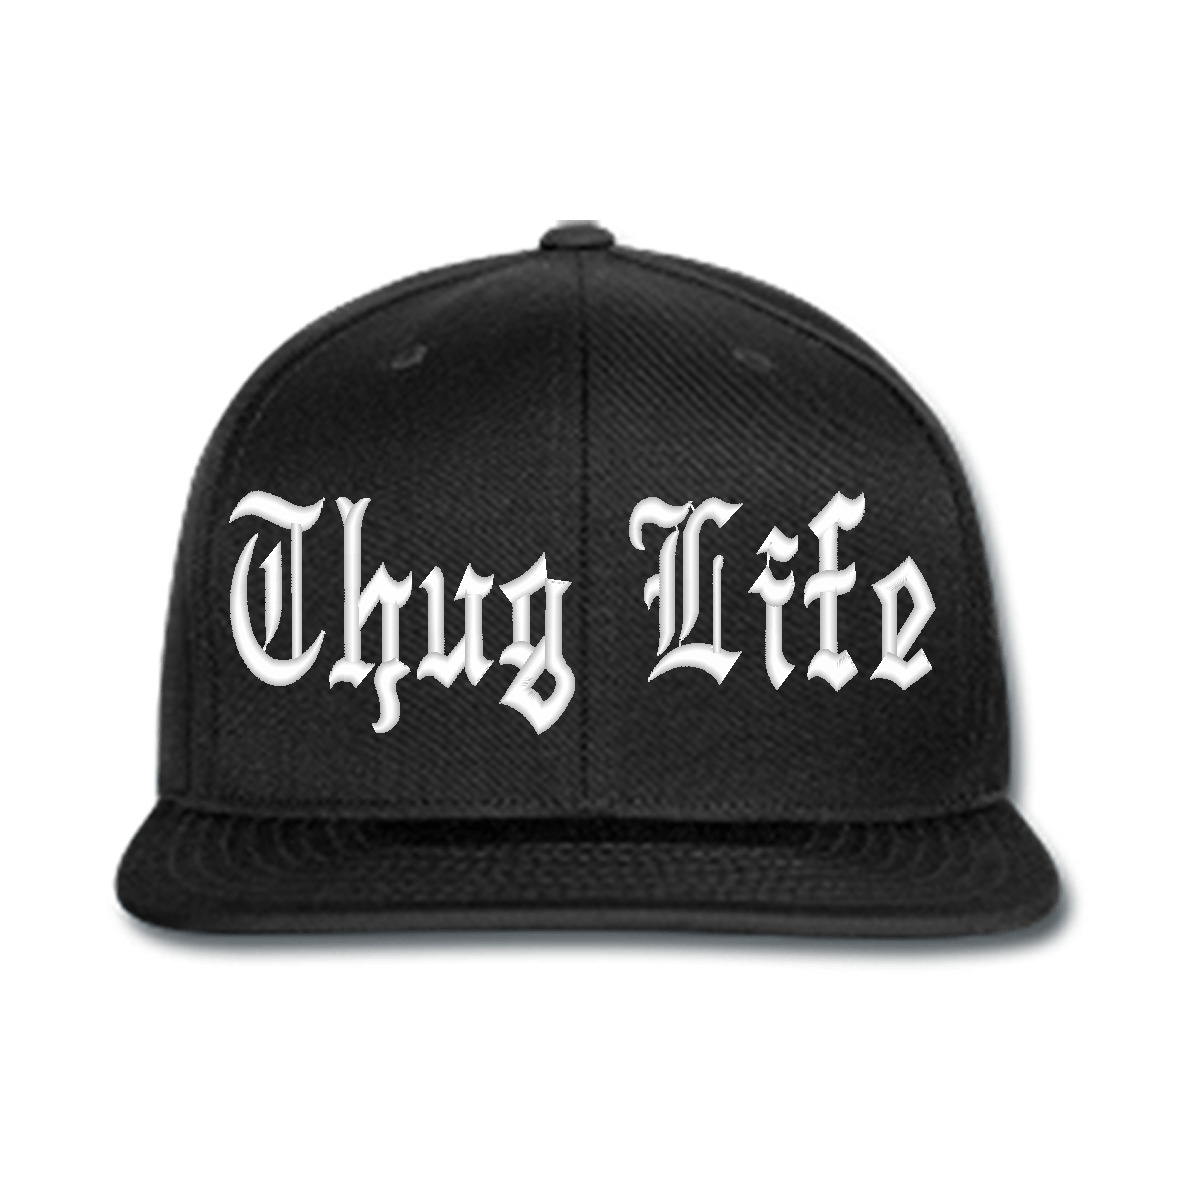 Thug Life Black Cap png icons